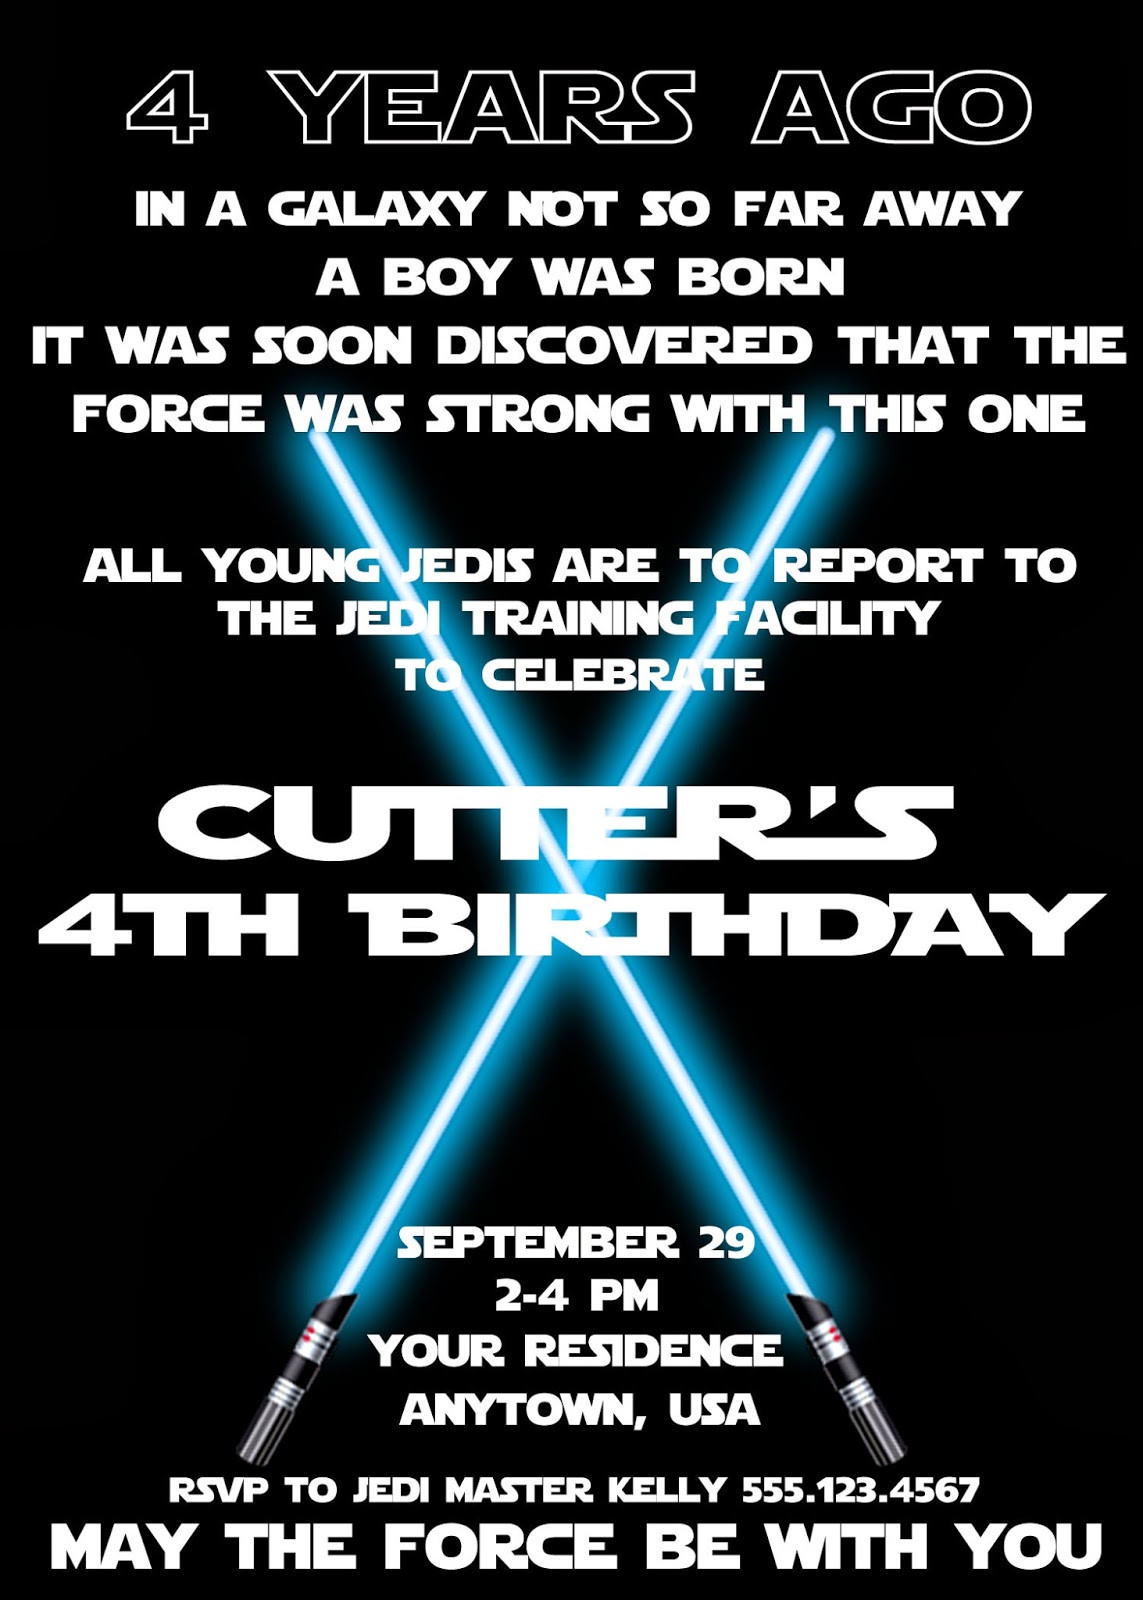 Star Wars Birthday Party Invitation
 Plan an Amazing Star Wars Birthday Party